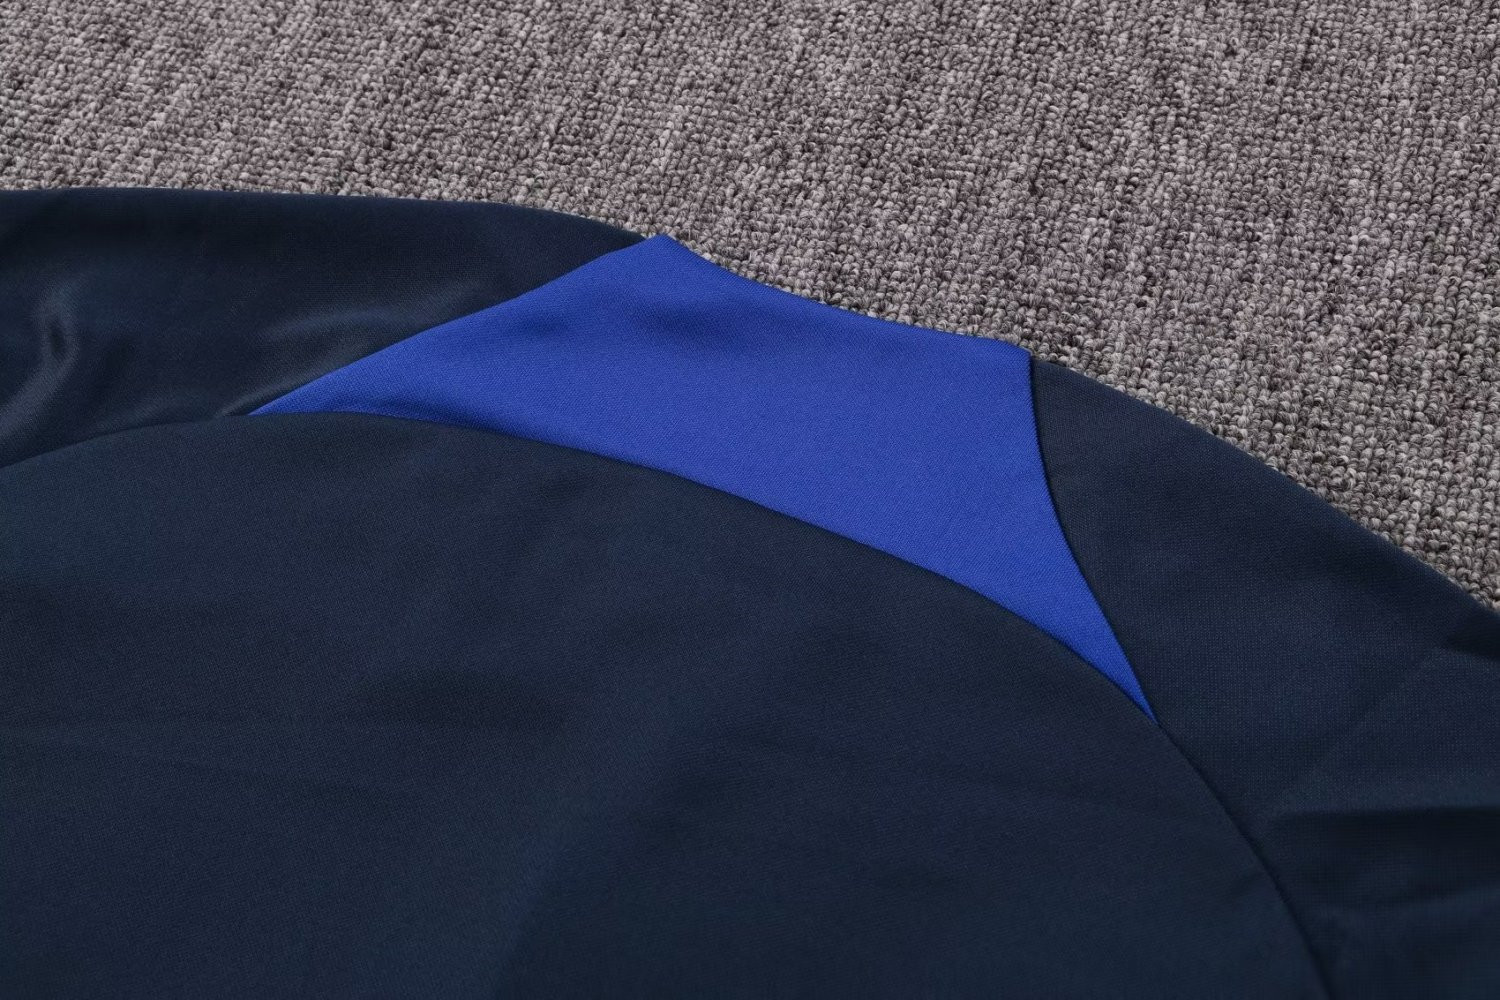 Chelsea Soccer Jacket + Pants Replica Navy 2022/23 Mens